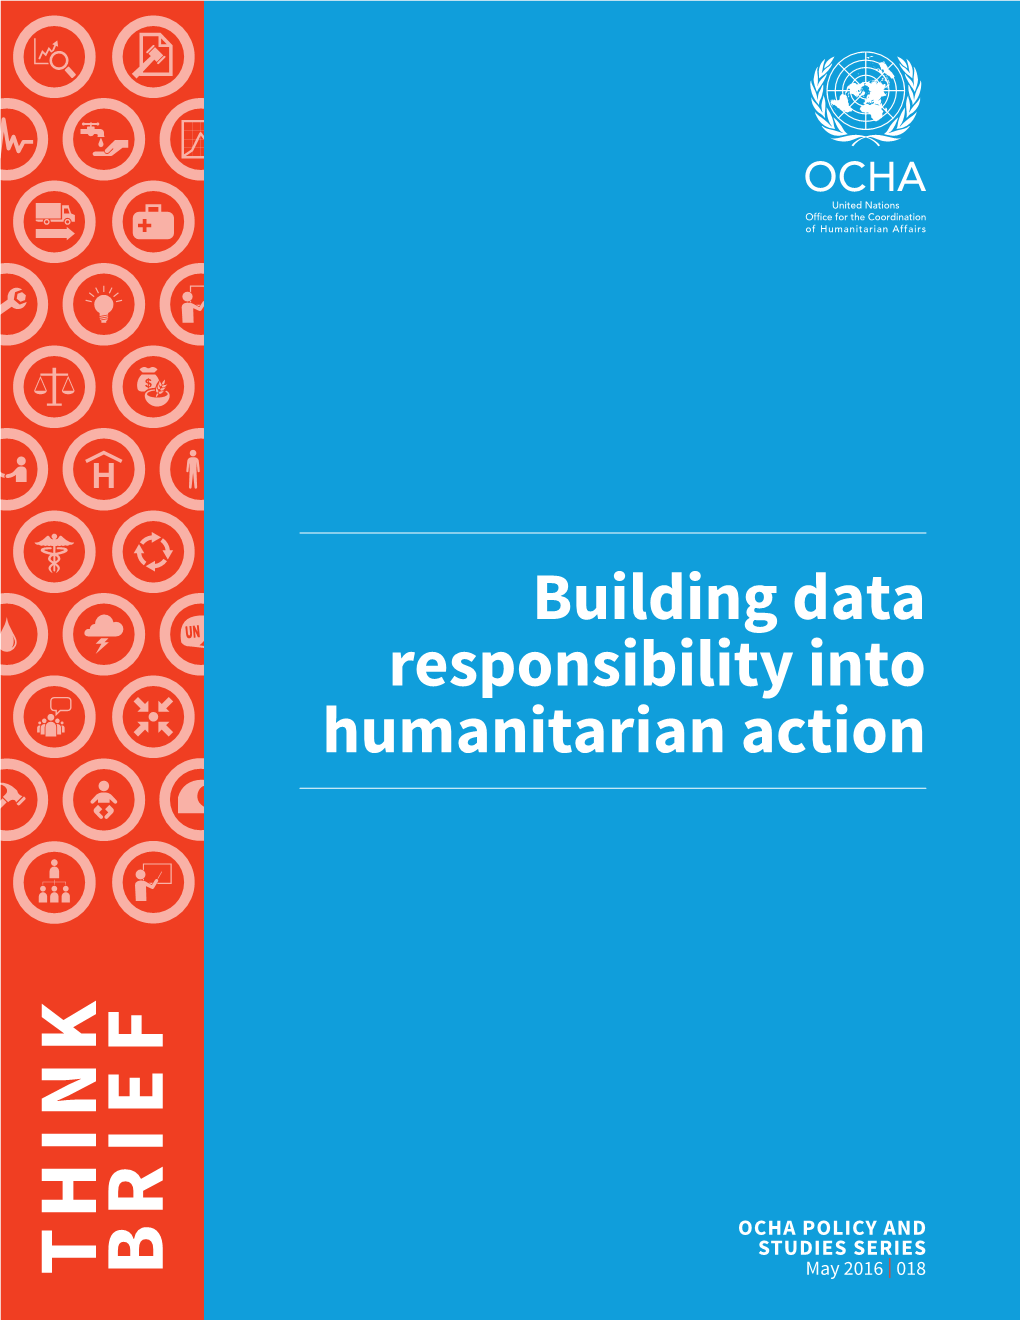 Building Data Responsibility Into Humanitarian Action